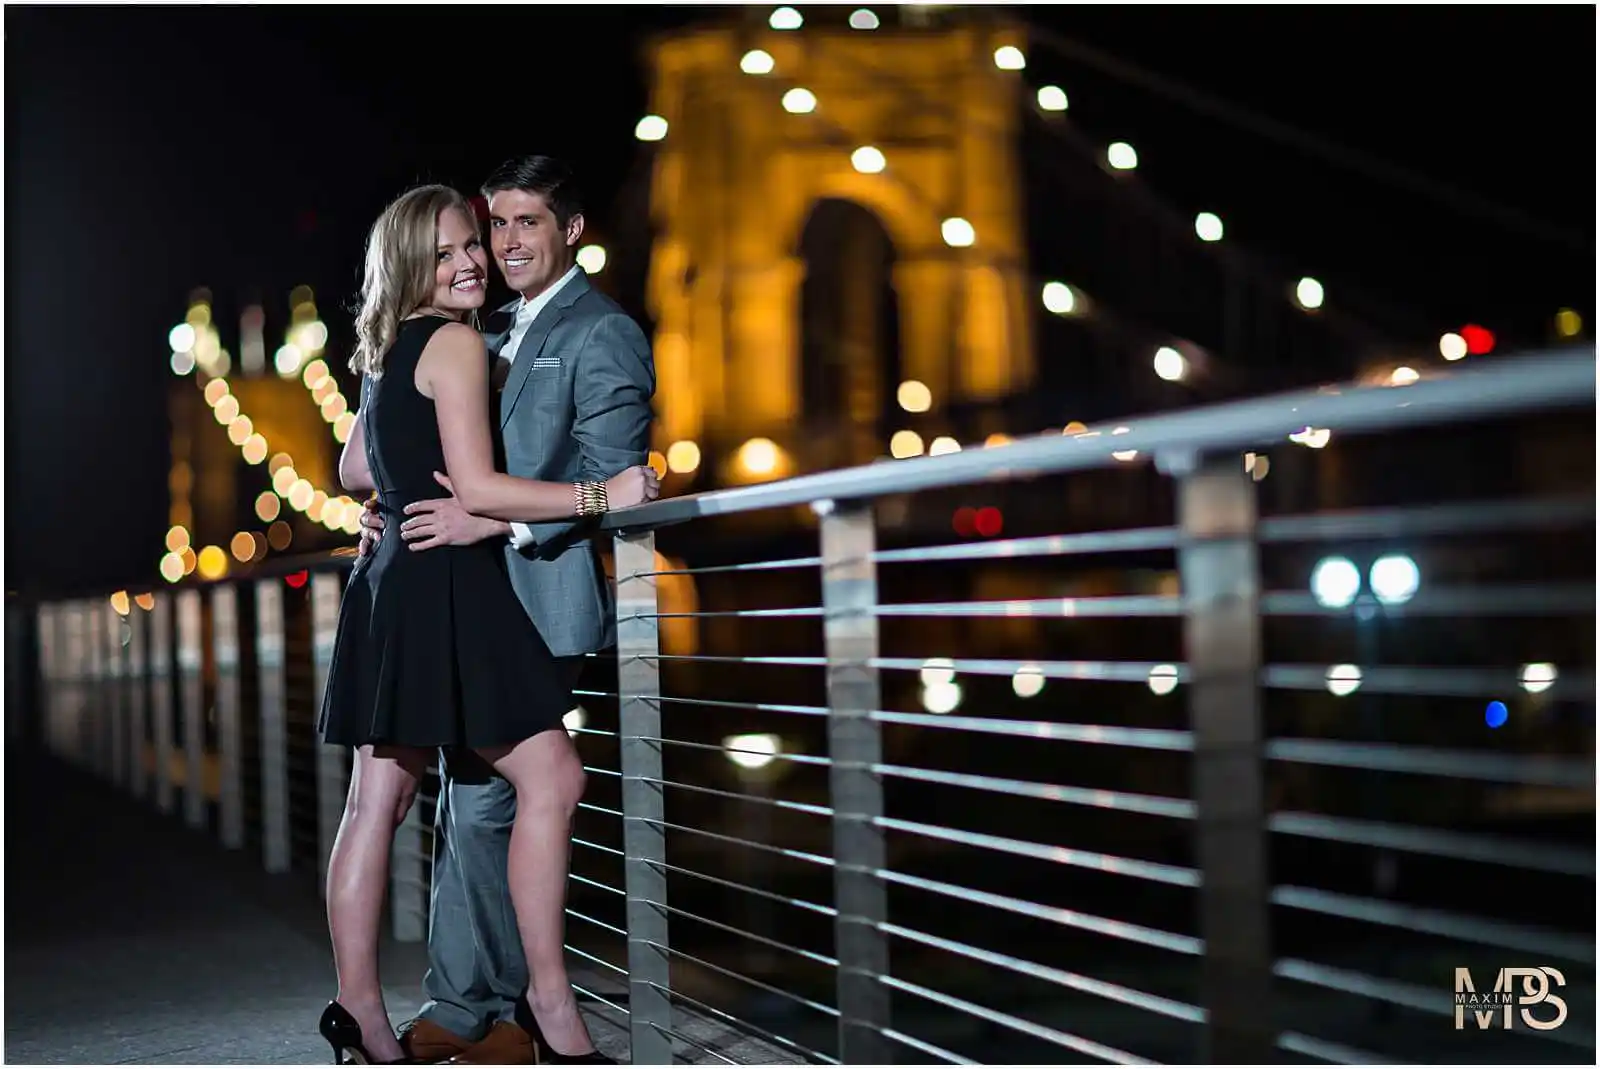 Couple embracing on a bridge with Cincinnati lights at night.